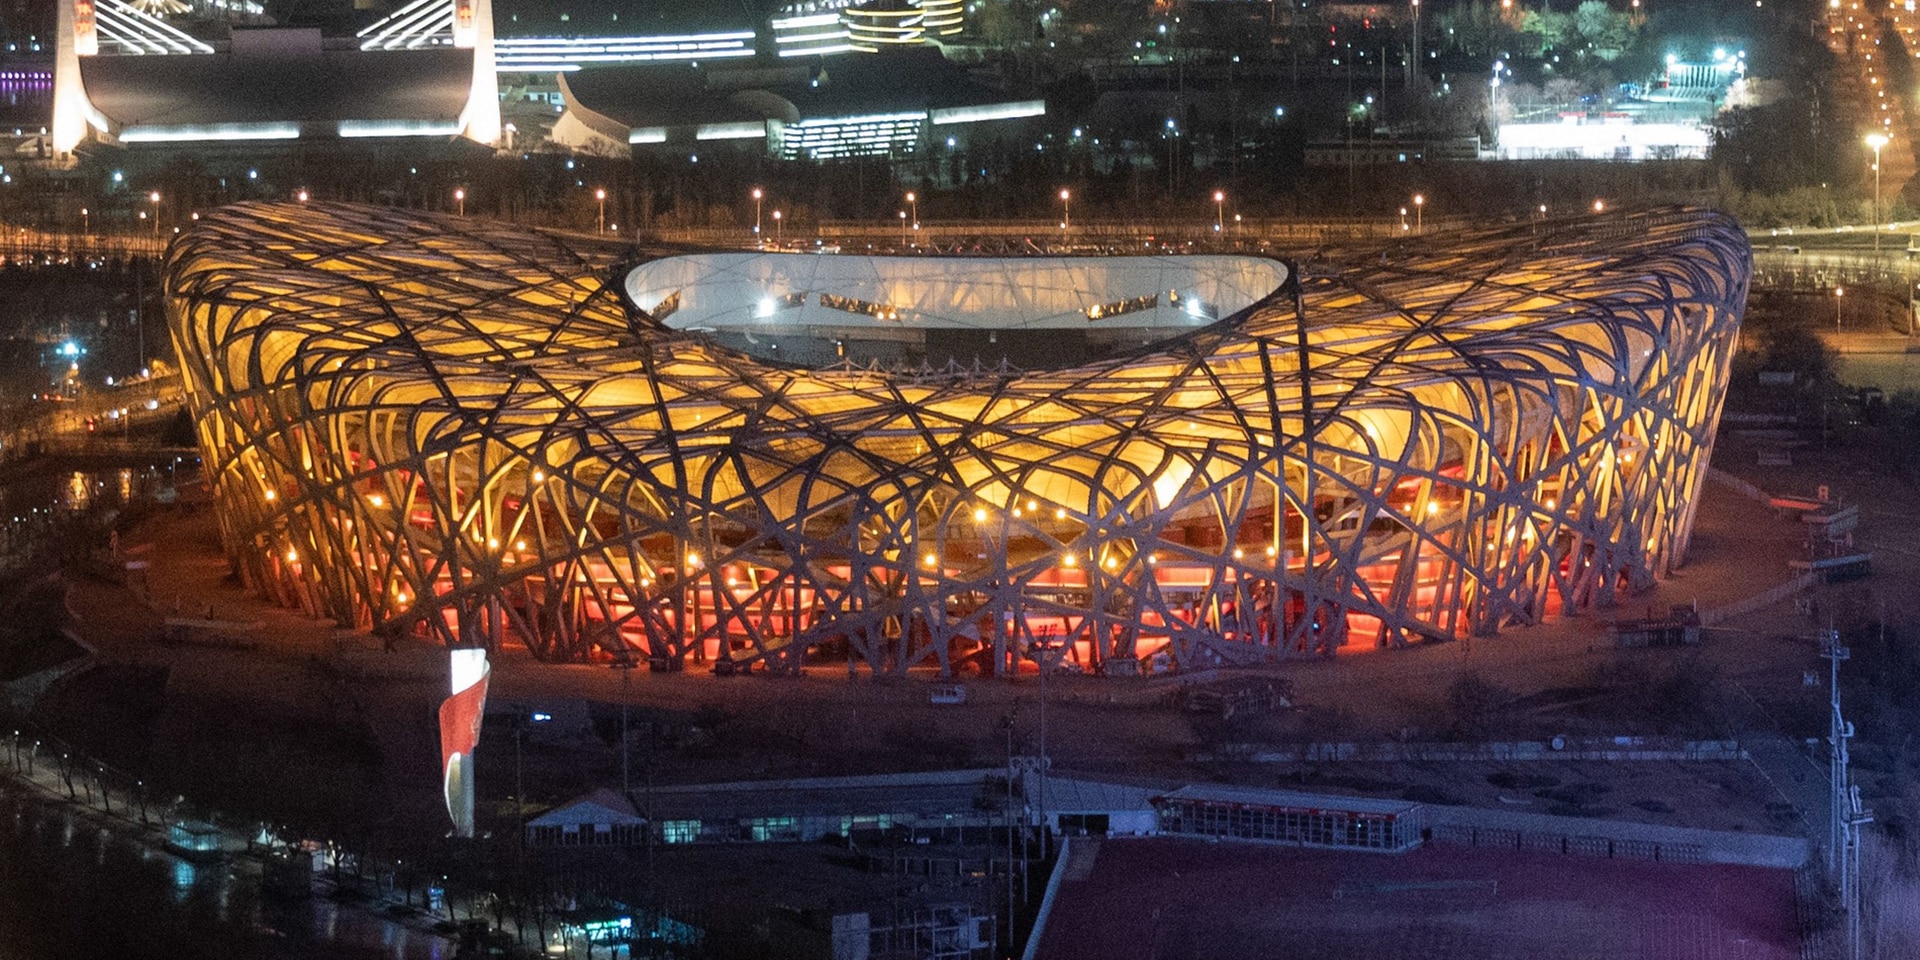 An aerial view of the Bird's Nest Stadium in Beijing.